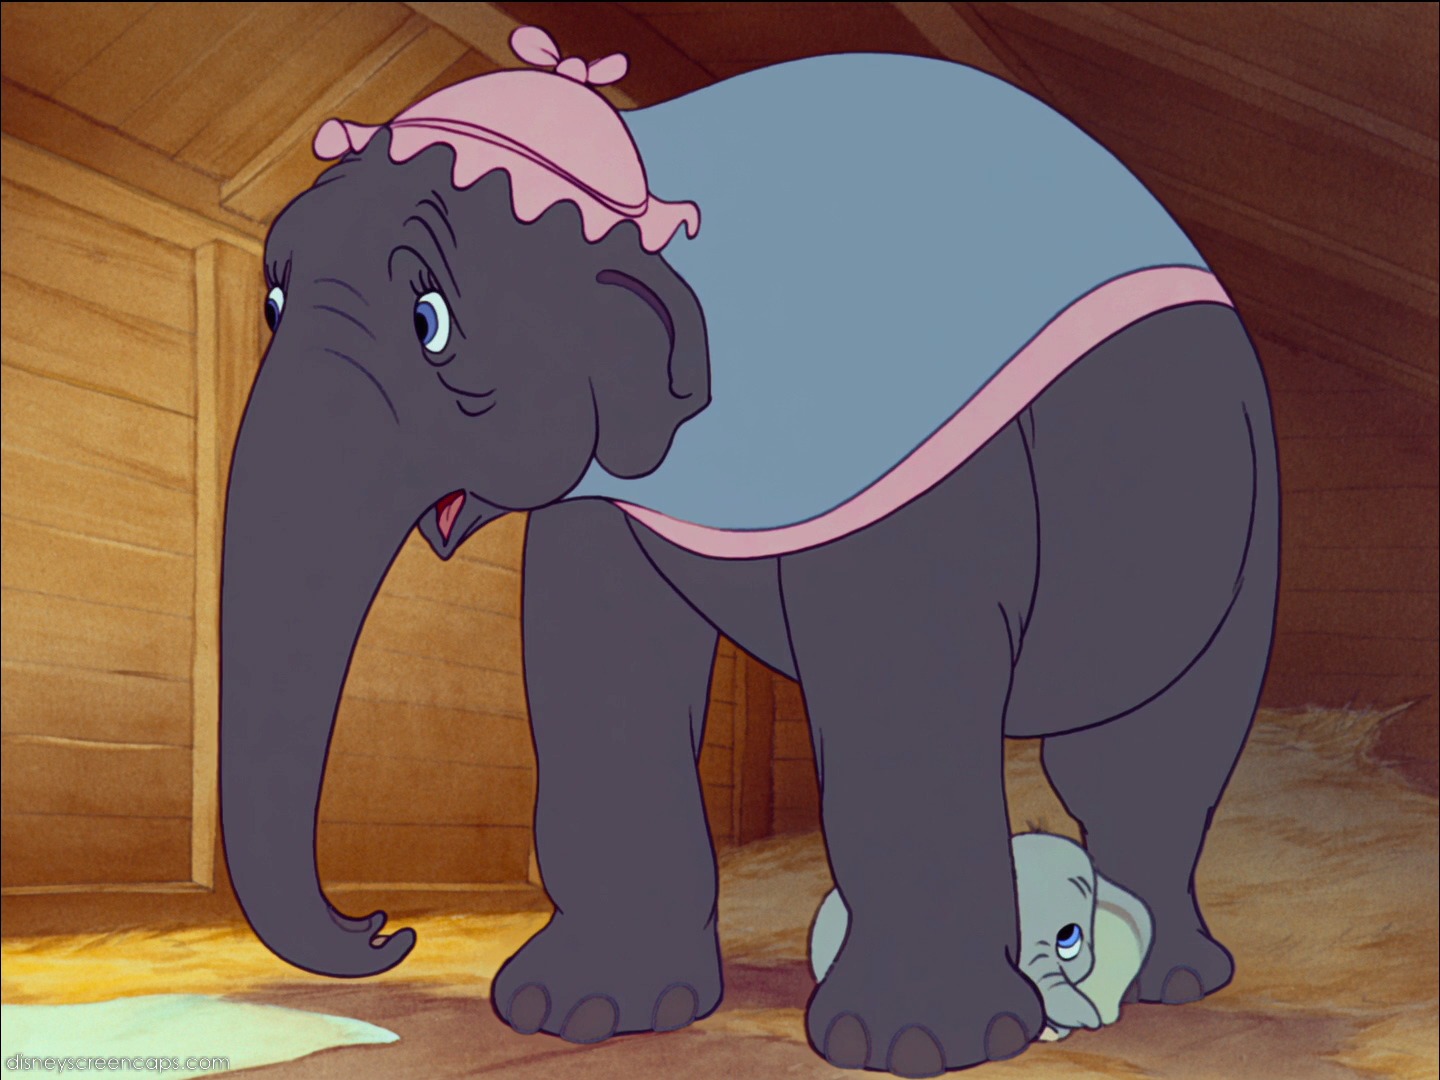 Мама про слоненка. Дамбо миссис джамбо. Слон миссис джамбо мамонт Мэнни. Слоненок из мультфильма.